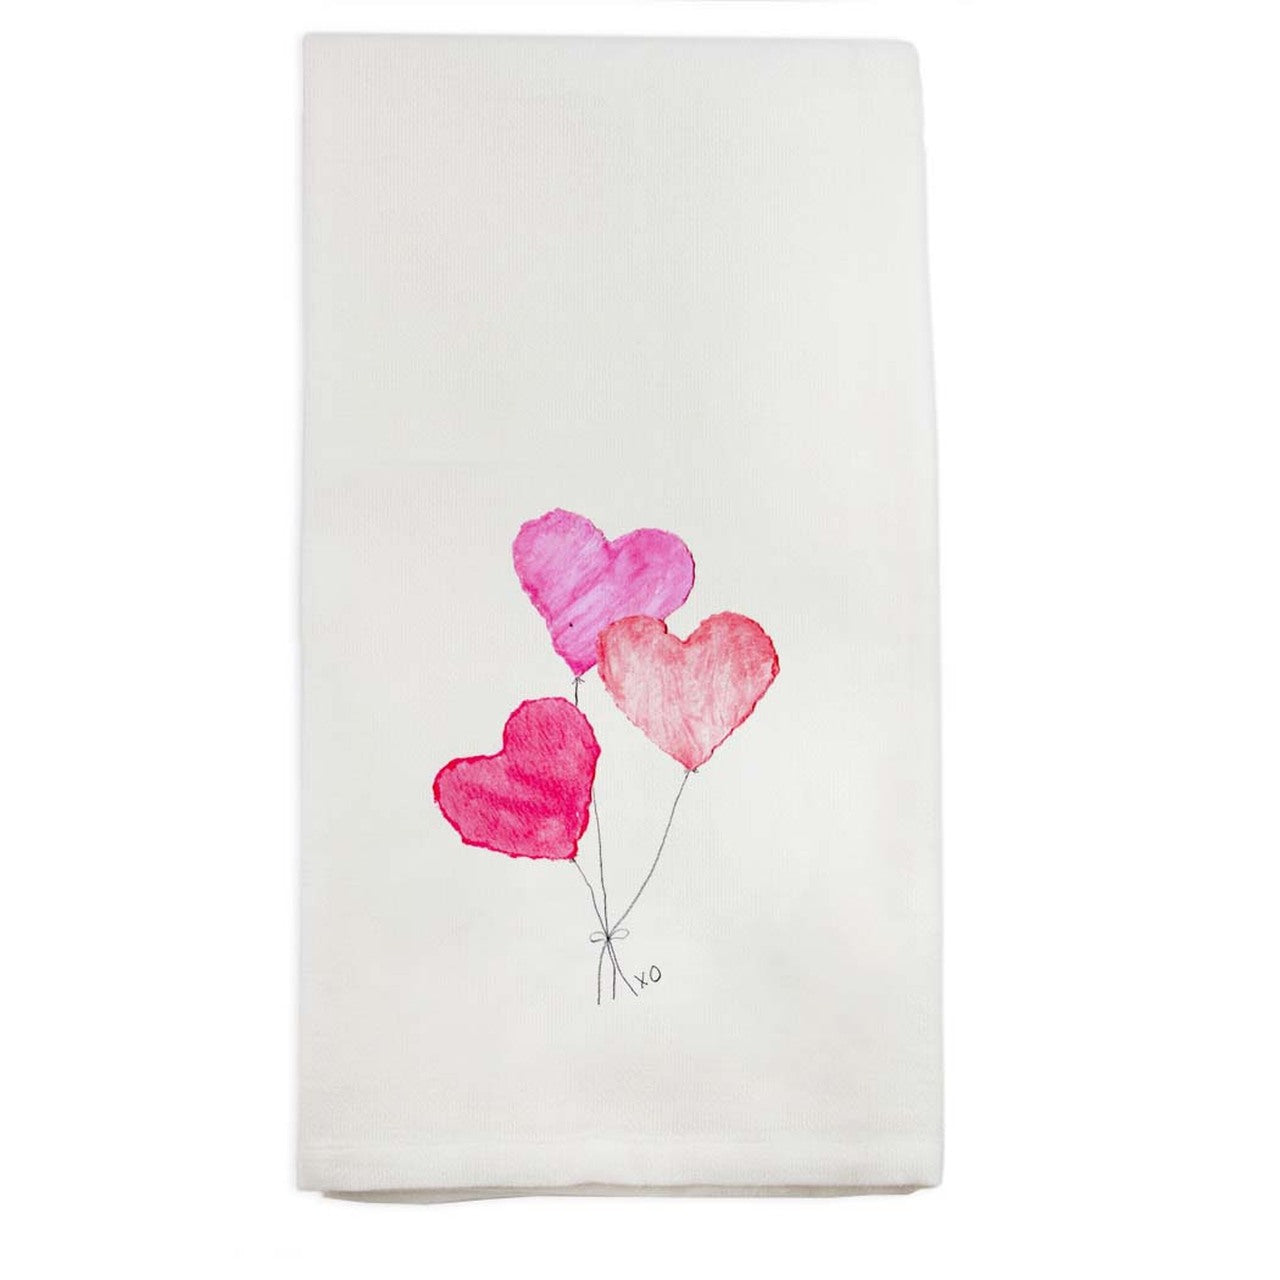 Three Balloon Heart Tea Towel